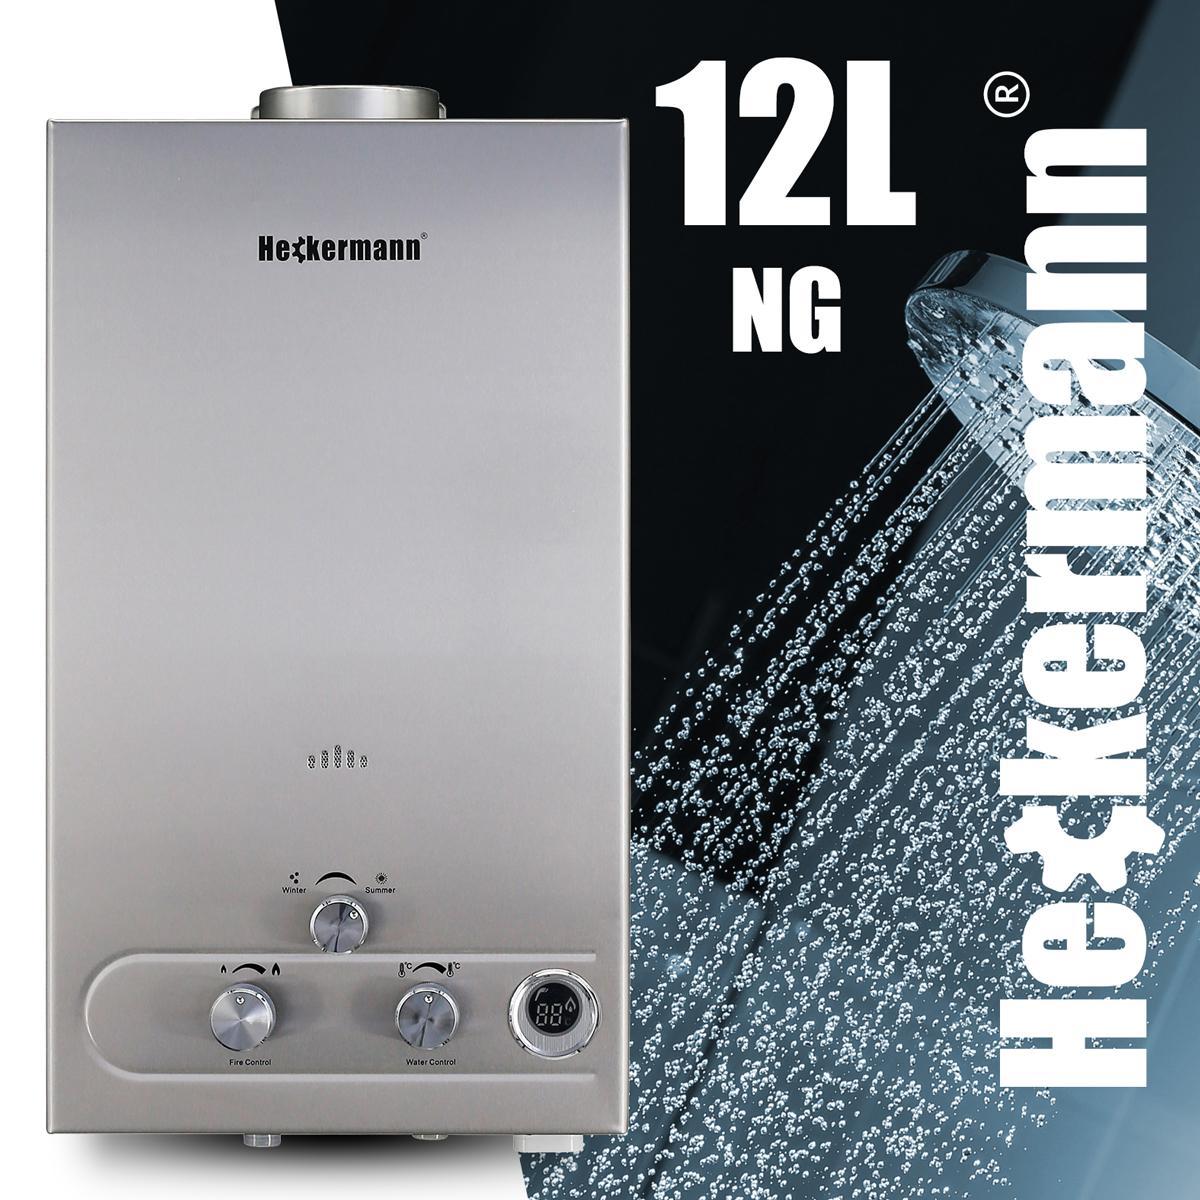 Gazowy podgrzewacz wody Heckermann JSD-HB02 12L NG 7 Full Screen